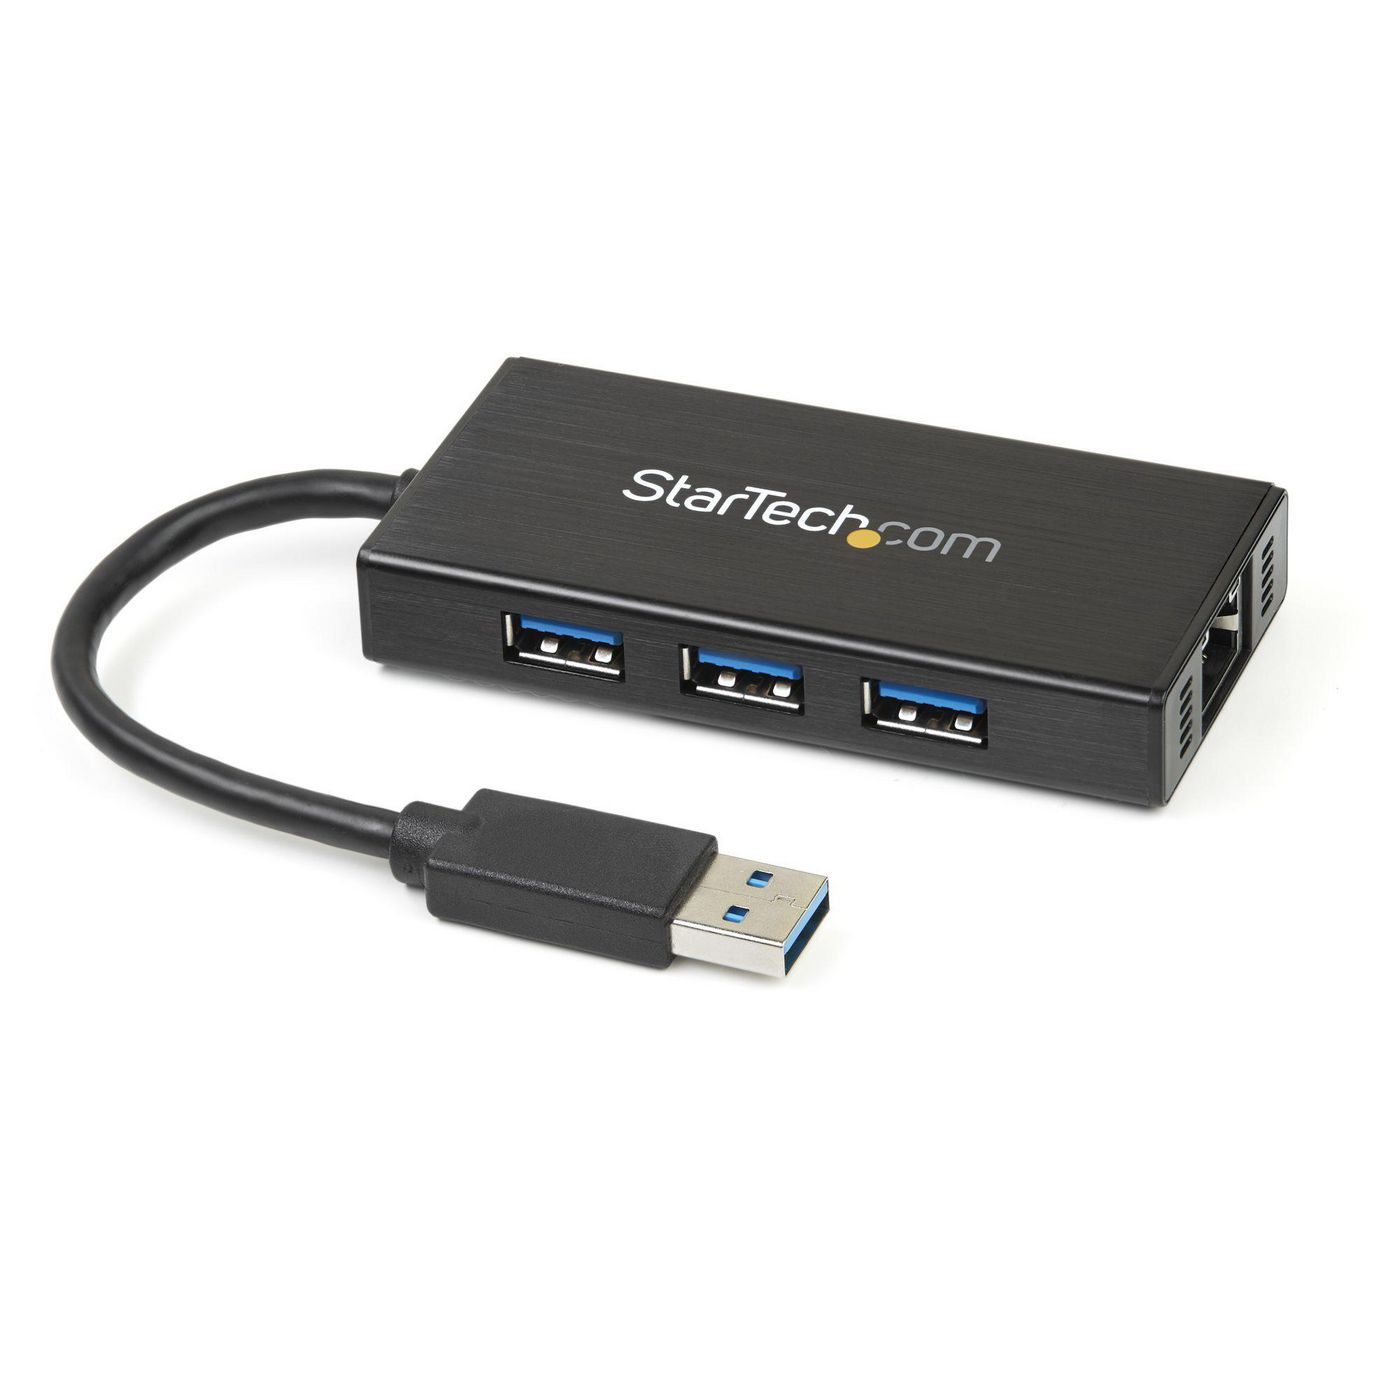 StarTechcom ST3300GU3B PORTABLE USB 3.0 HUB W GBE 